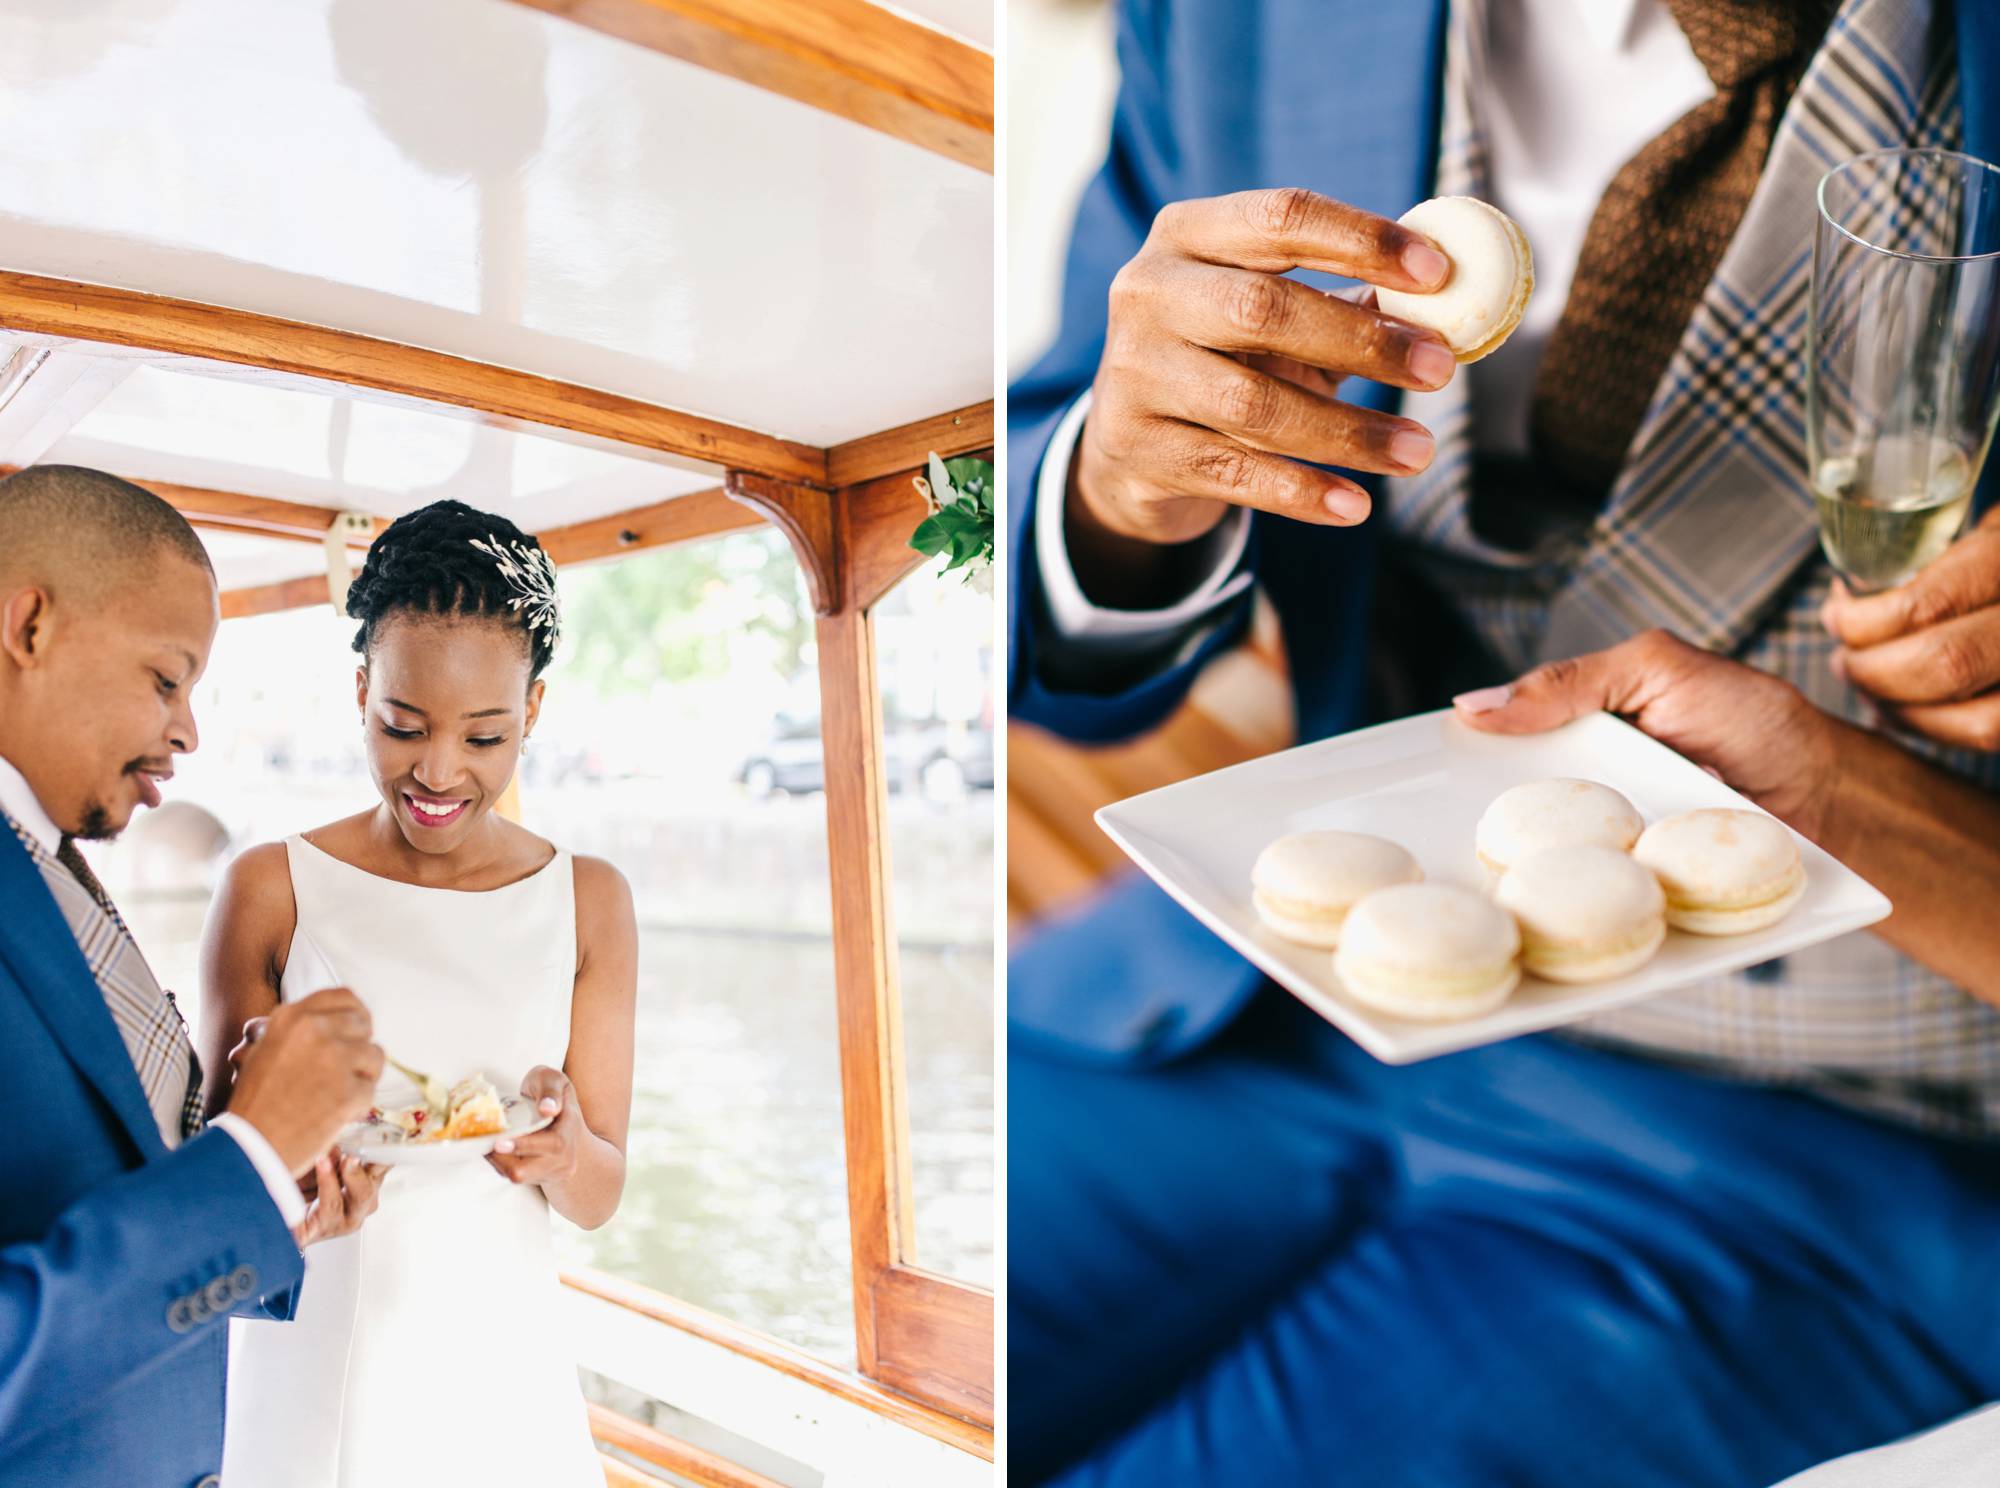 Wedding photographer elopement in amsterdam - Wedding sweets